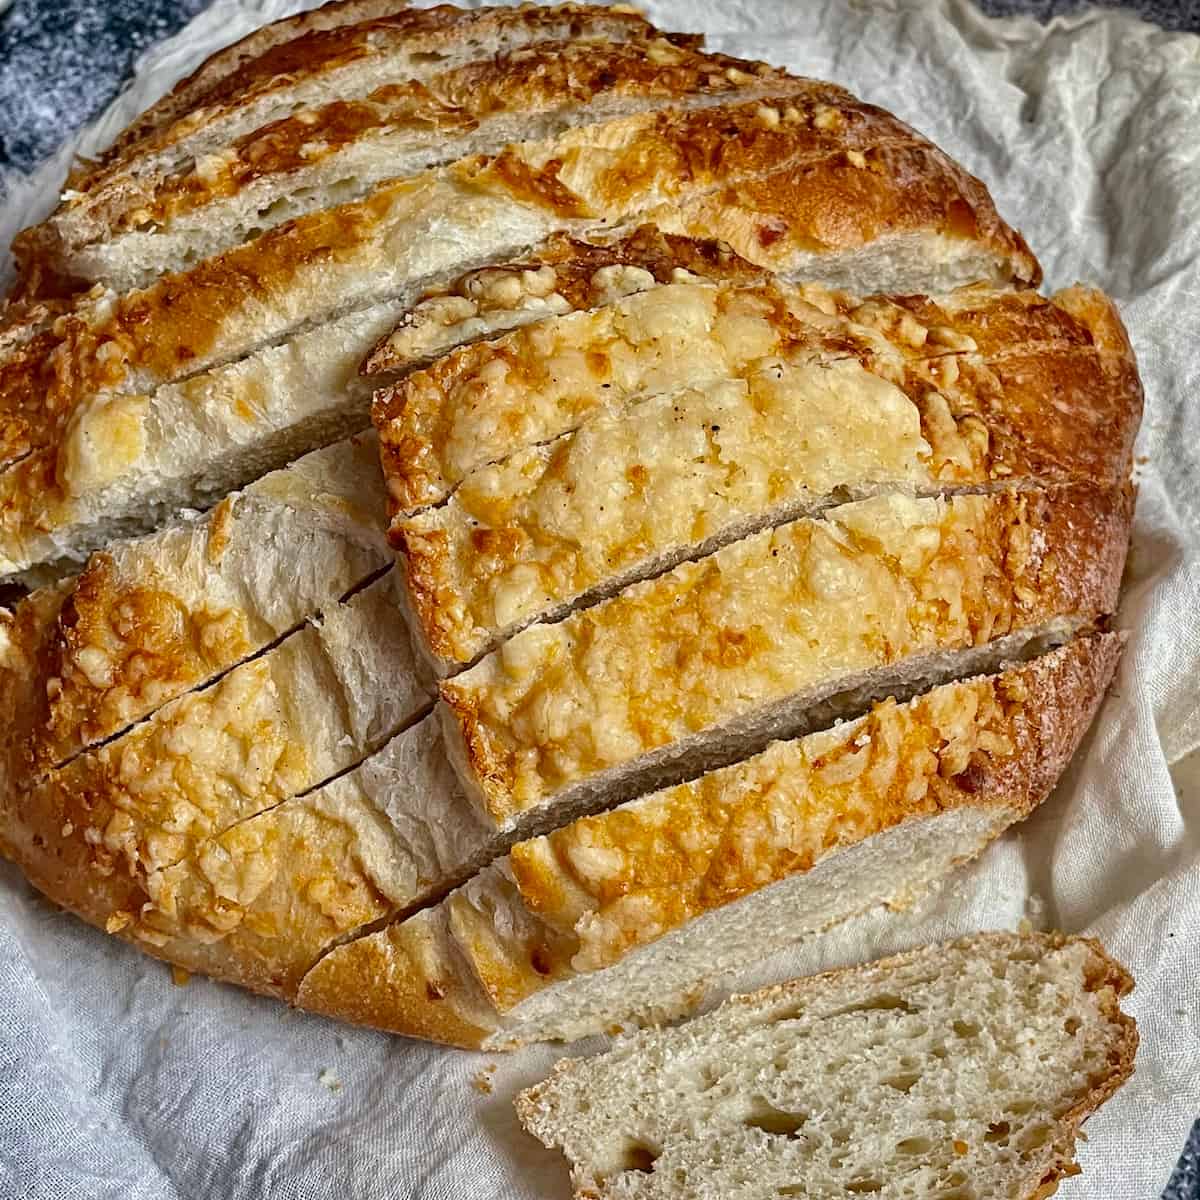 https://tastyoven.com/wp-content/uploads/2021/03/bread-machine-cheese-bread-image.jpg